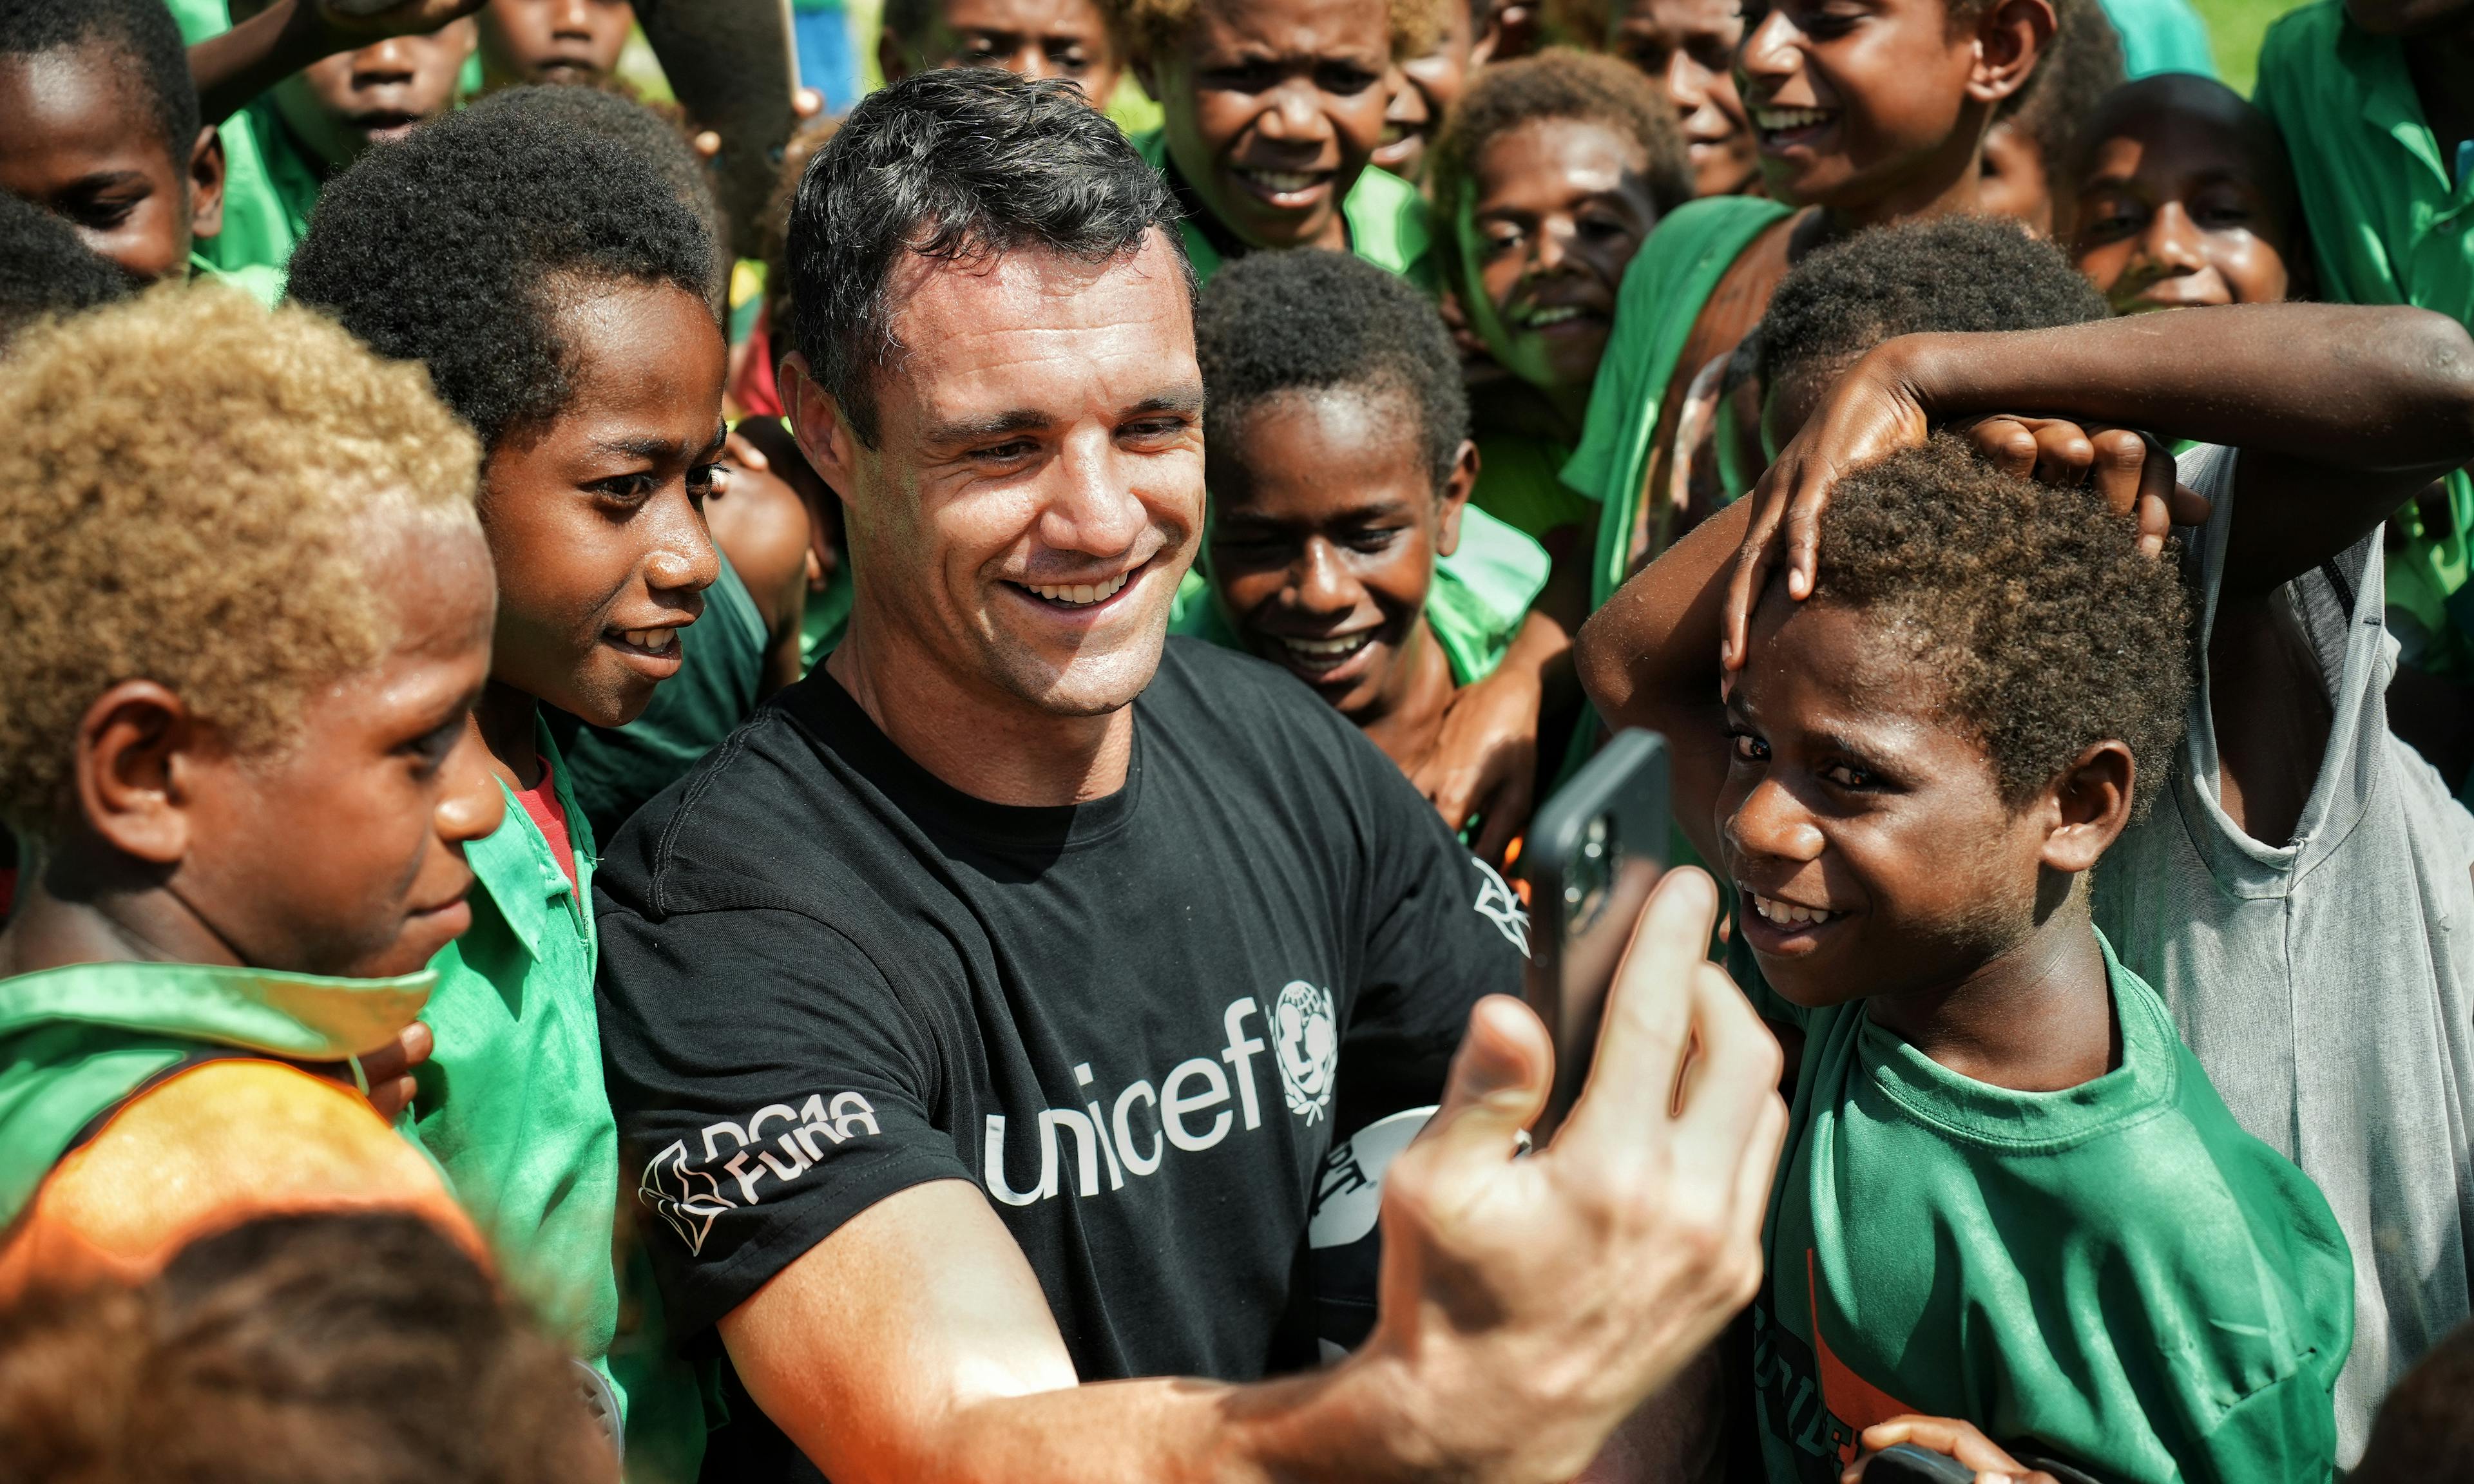 Meet Dan Carter, an official UNICEF Aotearoa Ambassador. 